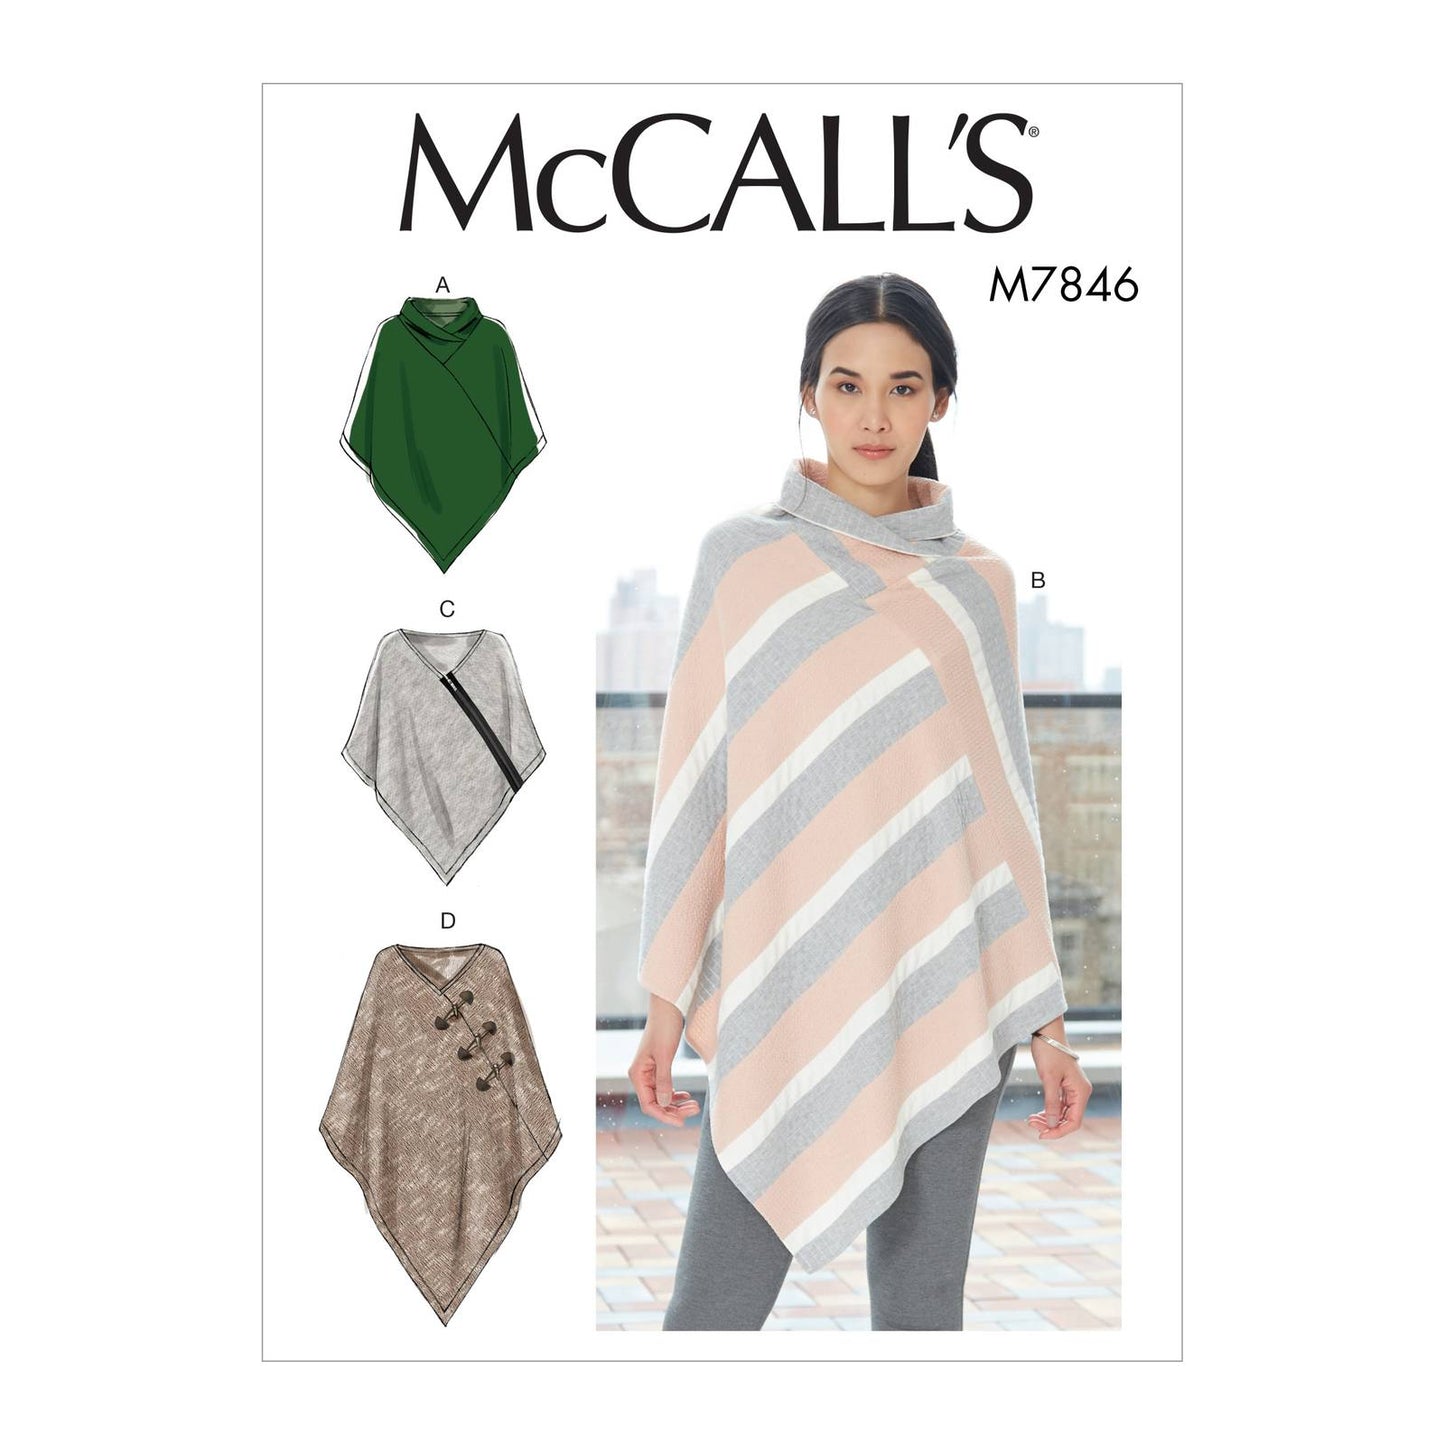 McCall's 7846